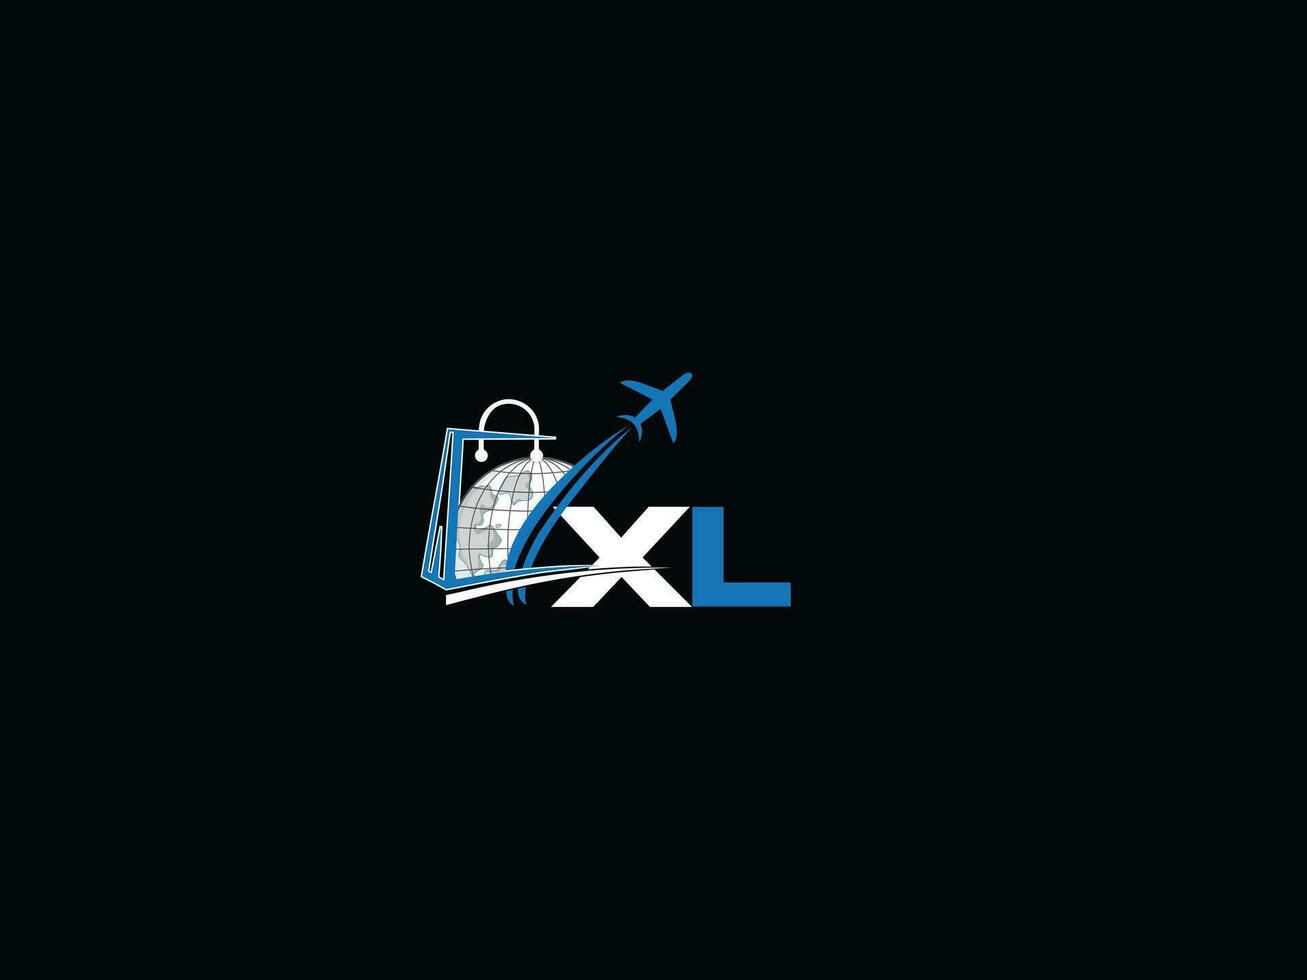 monogram xl globaal reizen logo, minimaal xl logo brief ontwerp vector